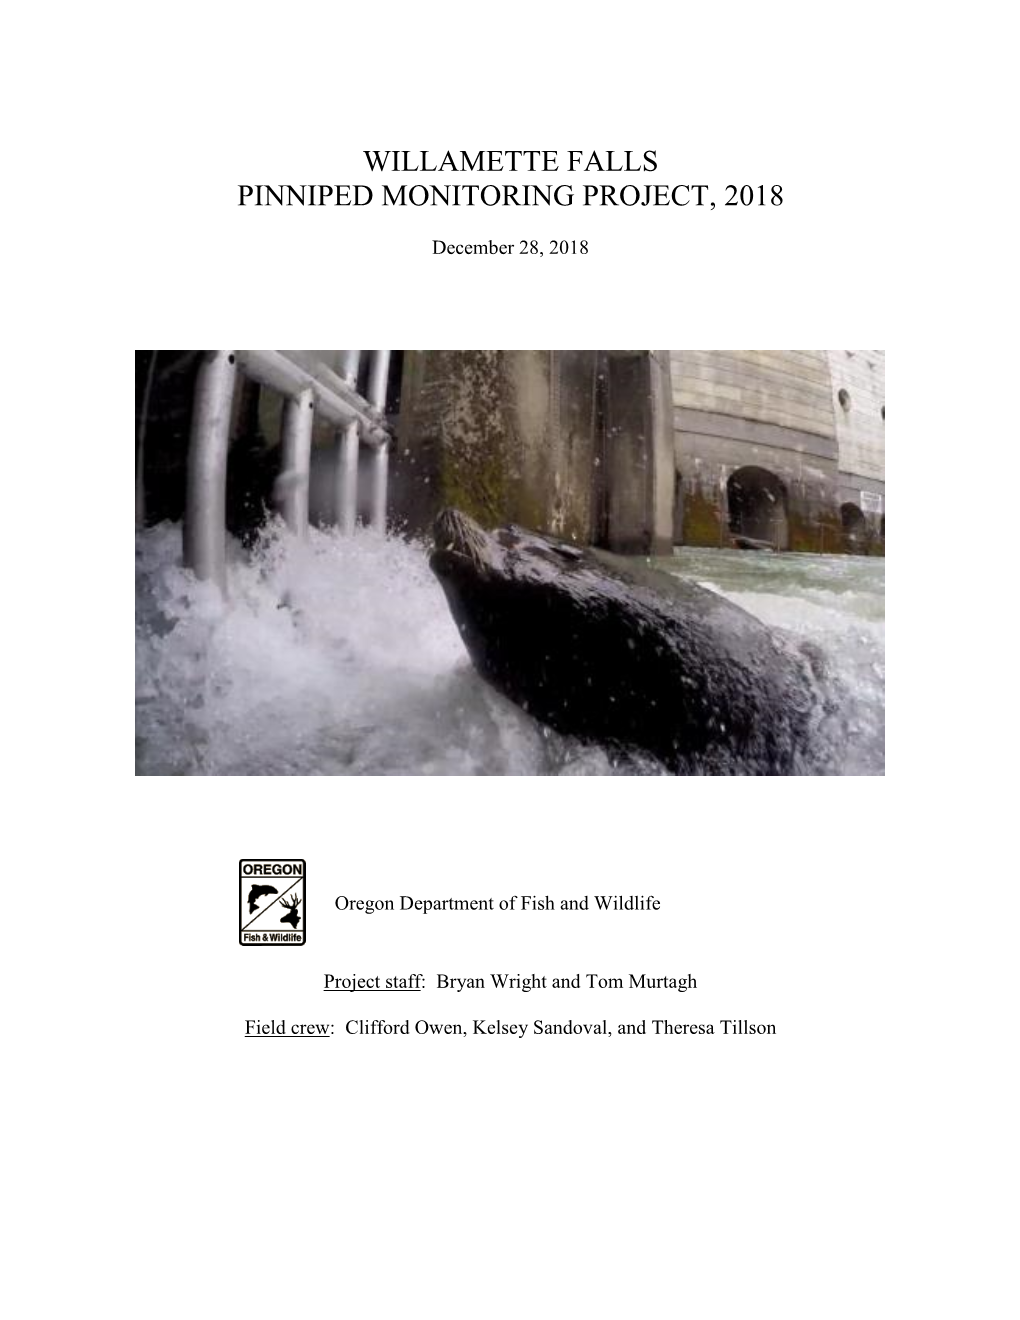 Willamette Falls Pinniped Monitoring Project, 2018